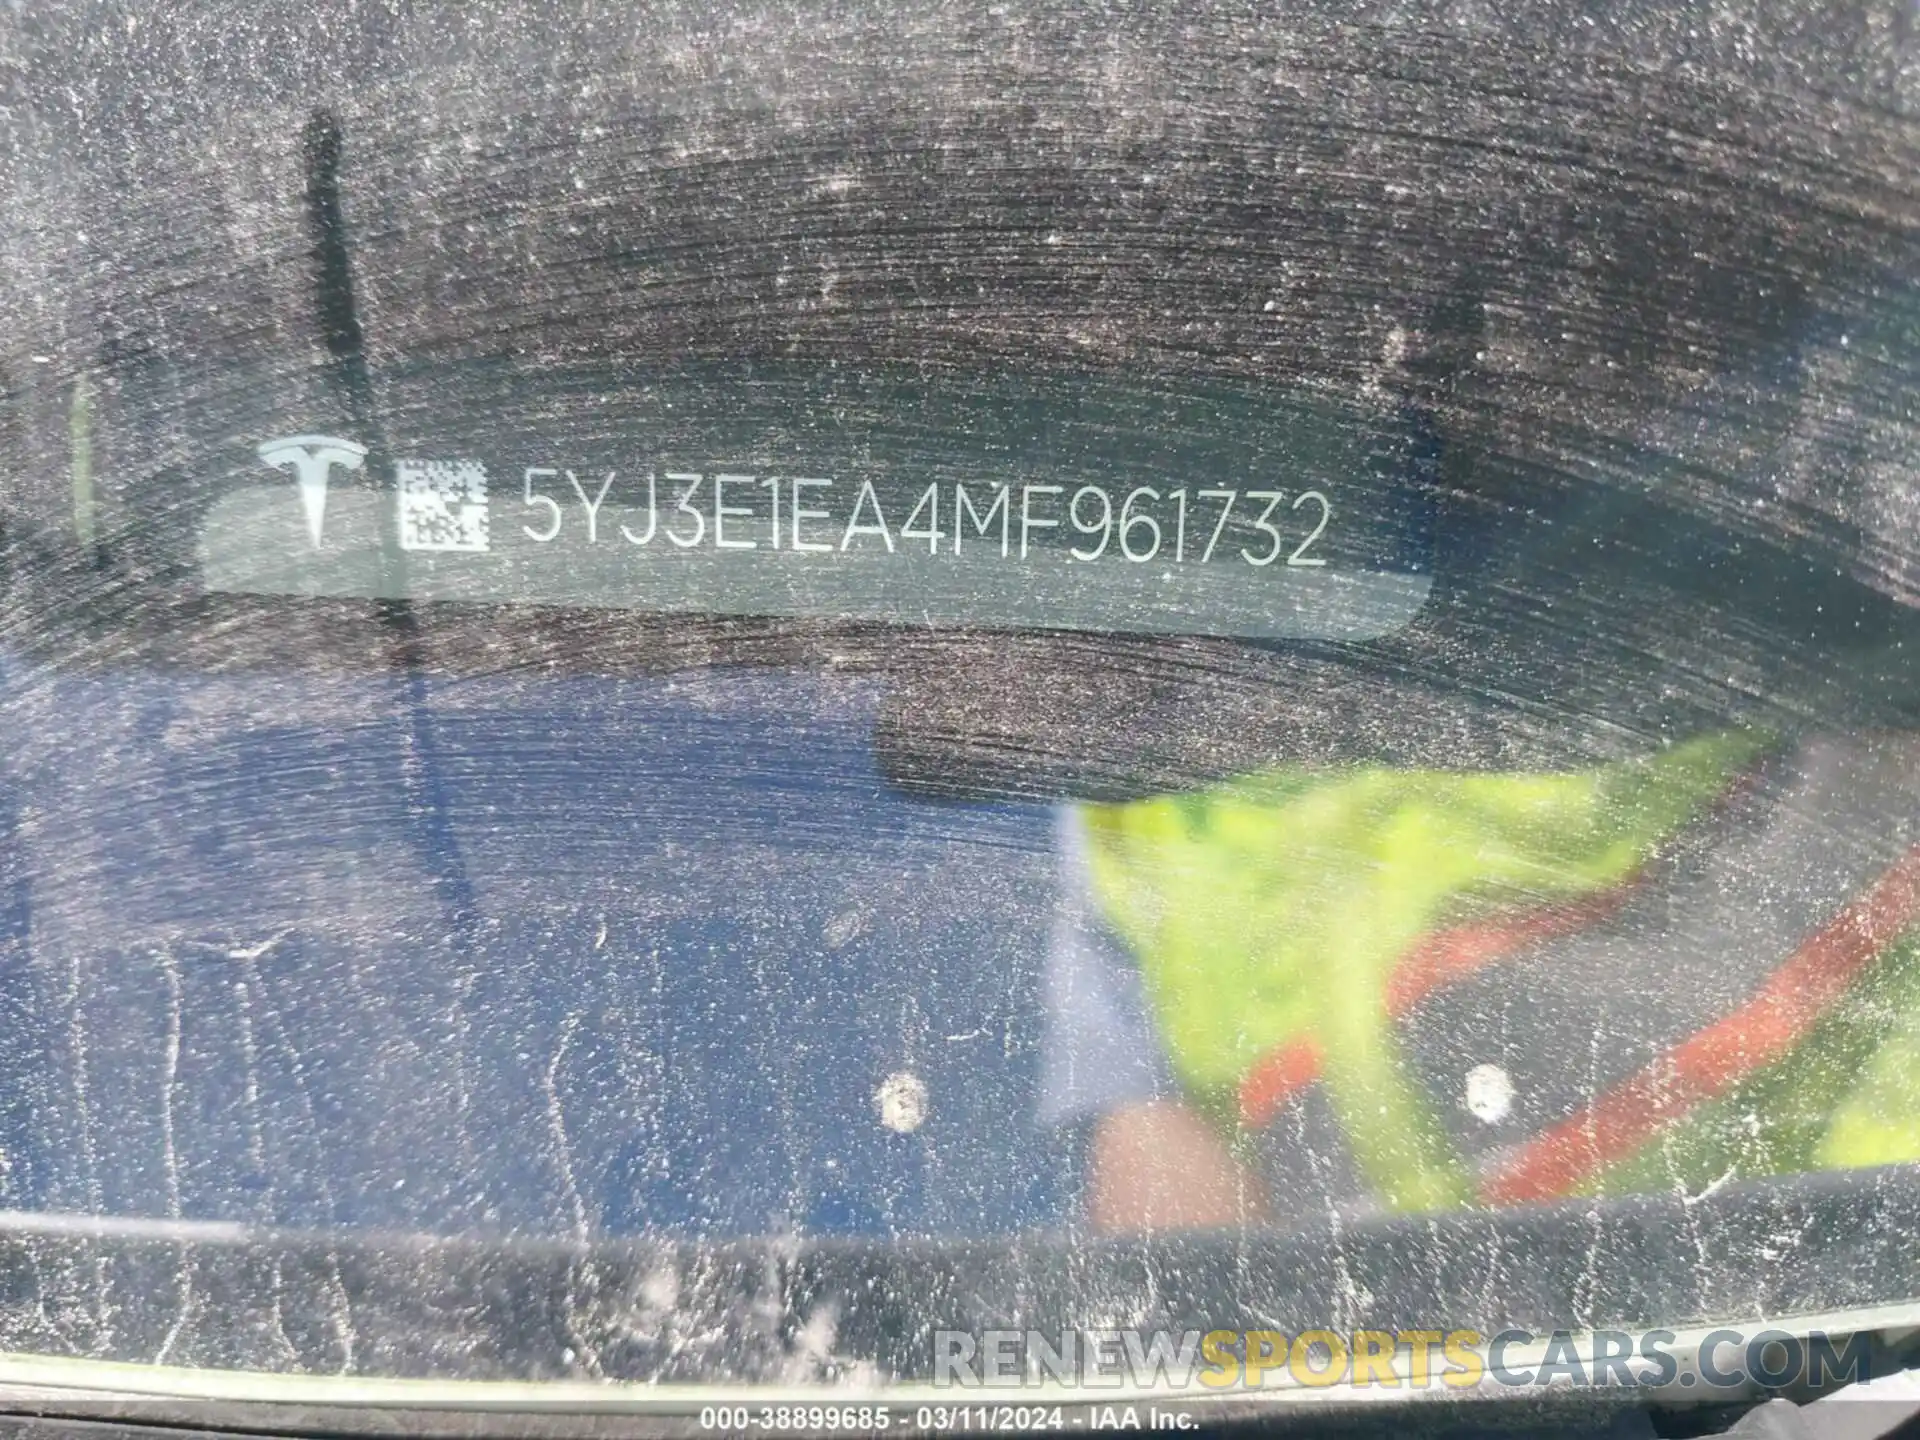 9 Photograph of a damaged car 5YJ3E1EA4MF961732 TESLA MODEL 3 2021